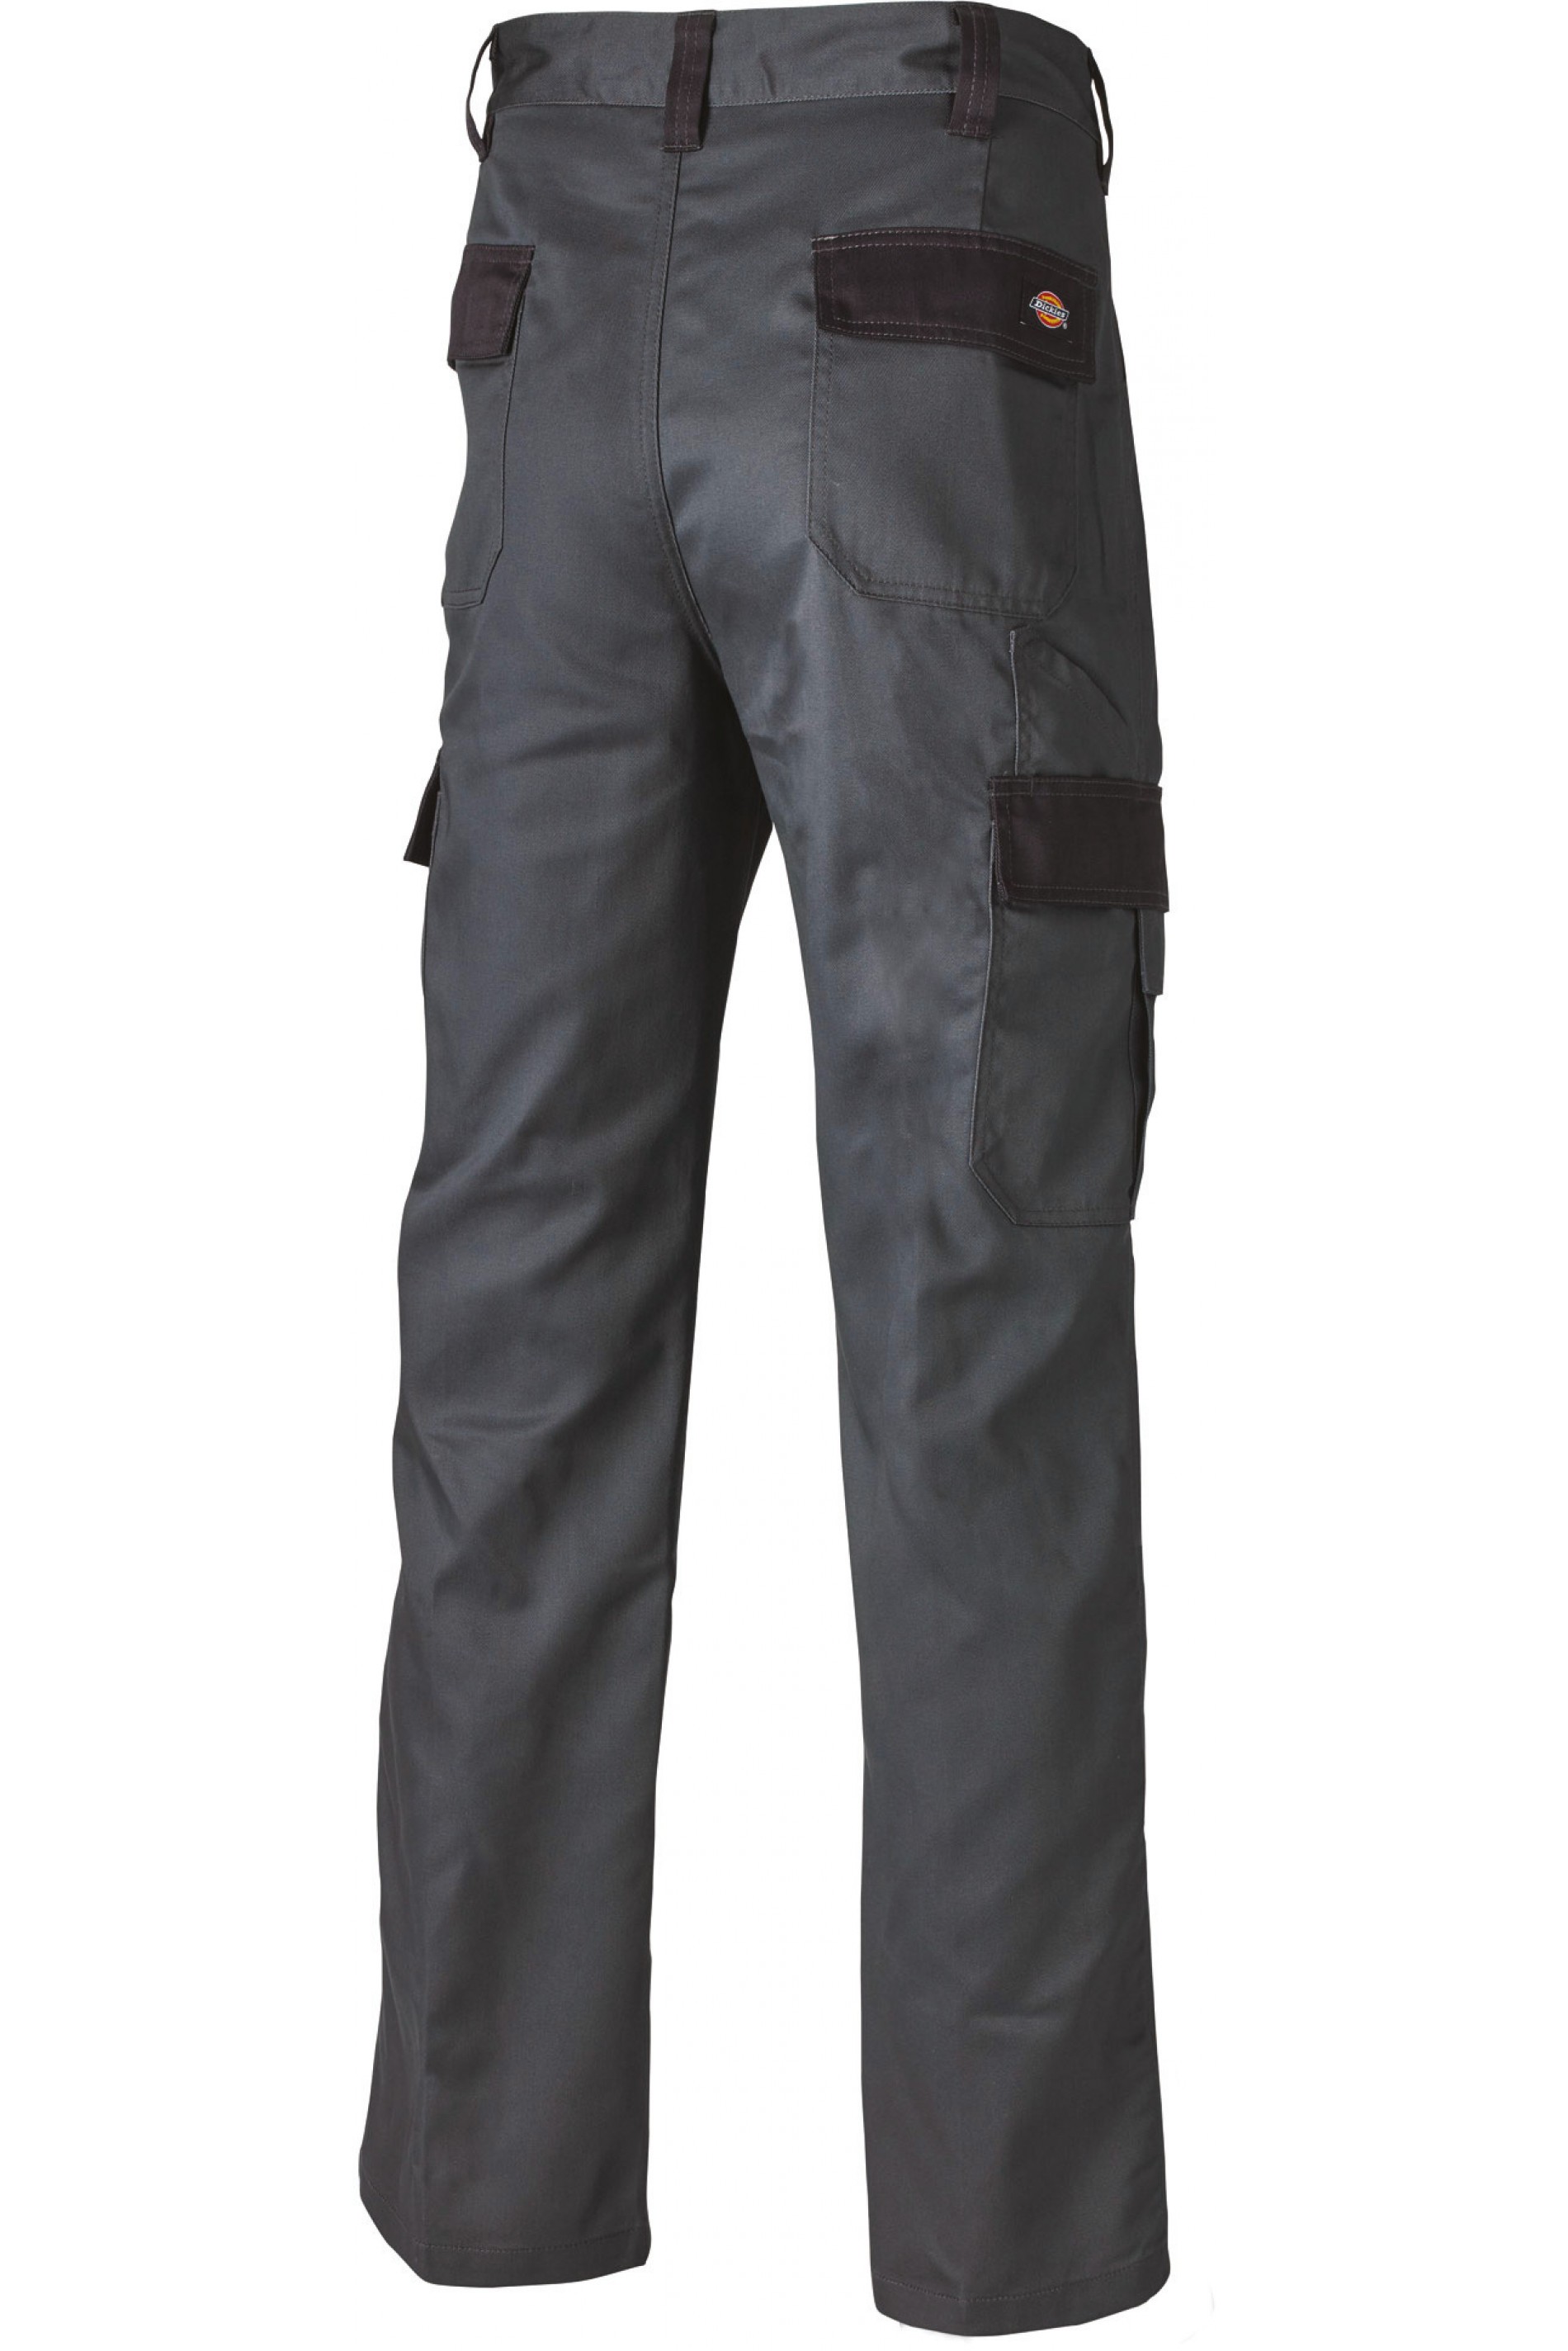 Pantalon travail poches genoux Everyday Dickies cotepro gris